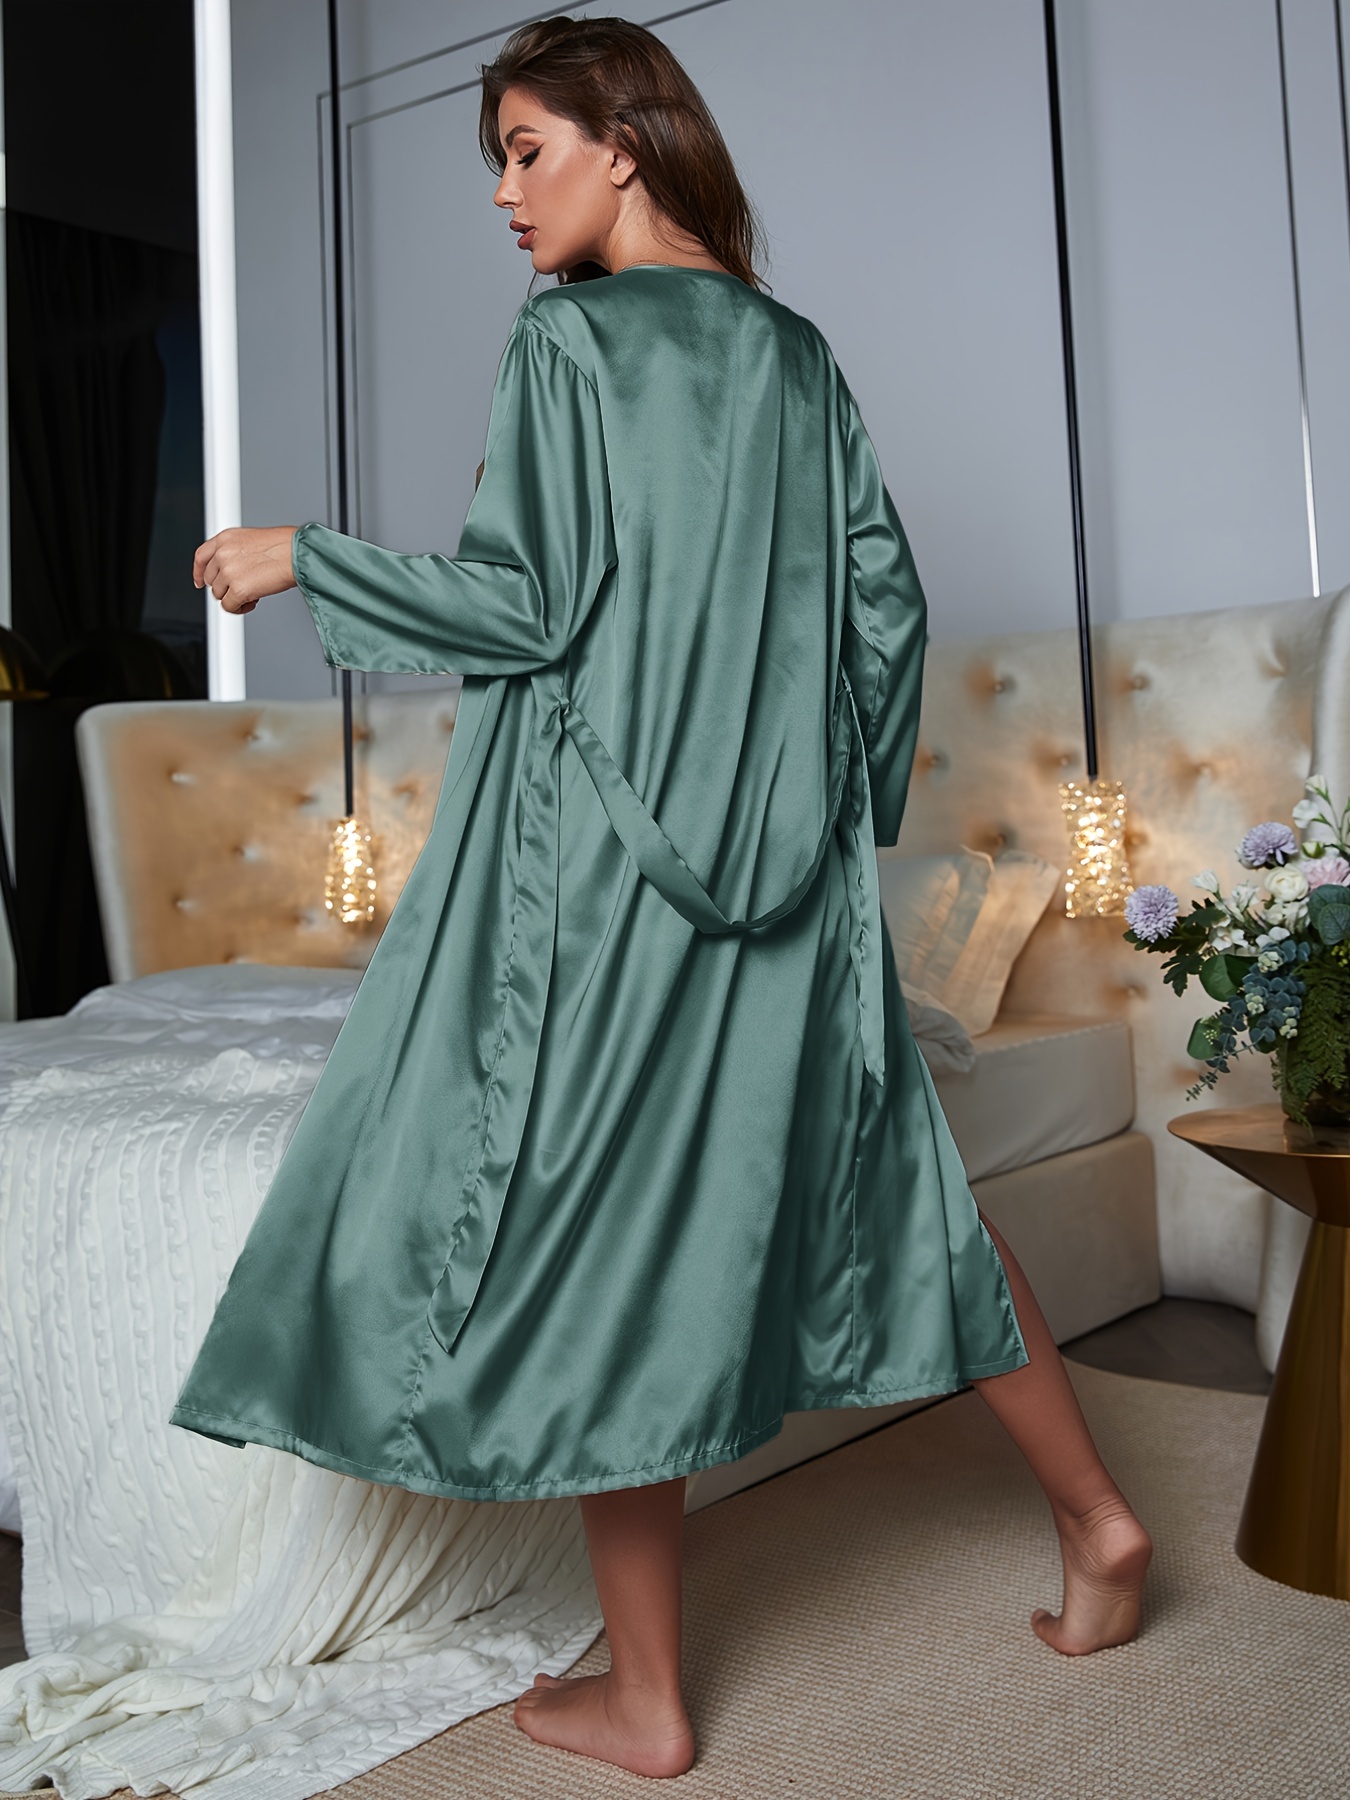 goowrom Women Nightgown Sleep Shirt Dress Satin Button Down Pajama Tops  Boyfriend Style